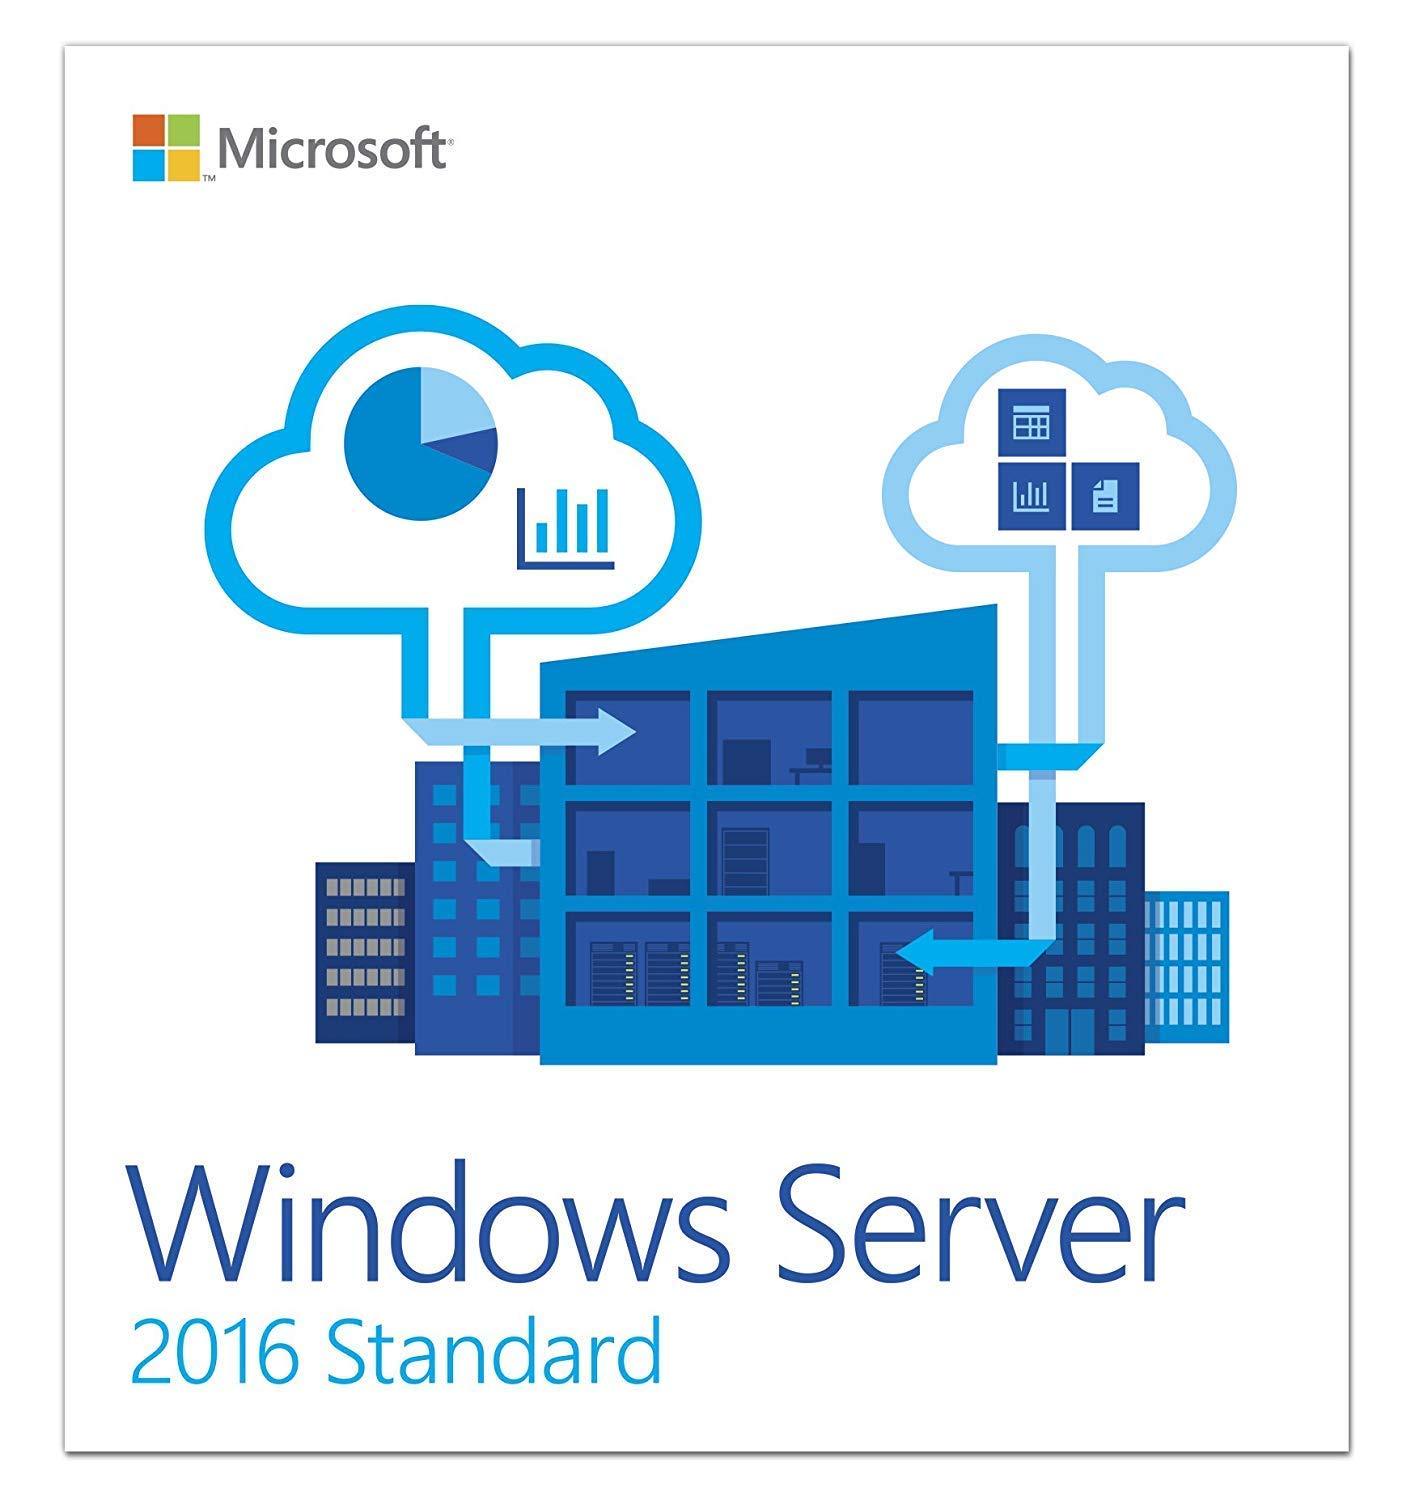 Windows Server 2016 STANDARD 8 Core product key